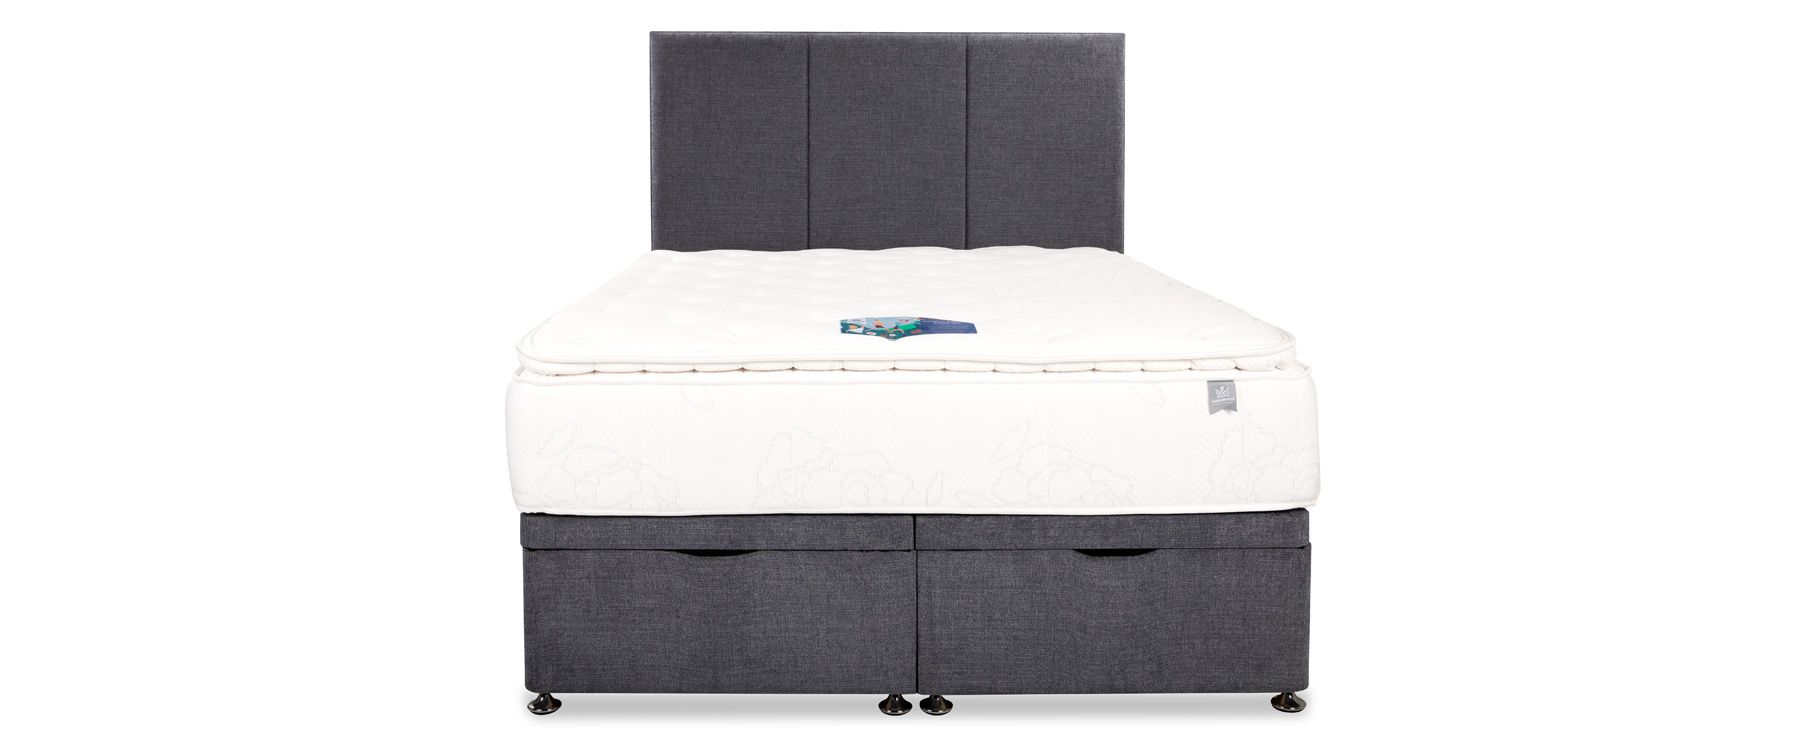 king koil comfort supreme pillowtop mattress